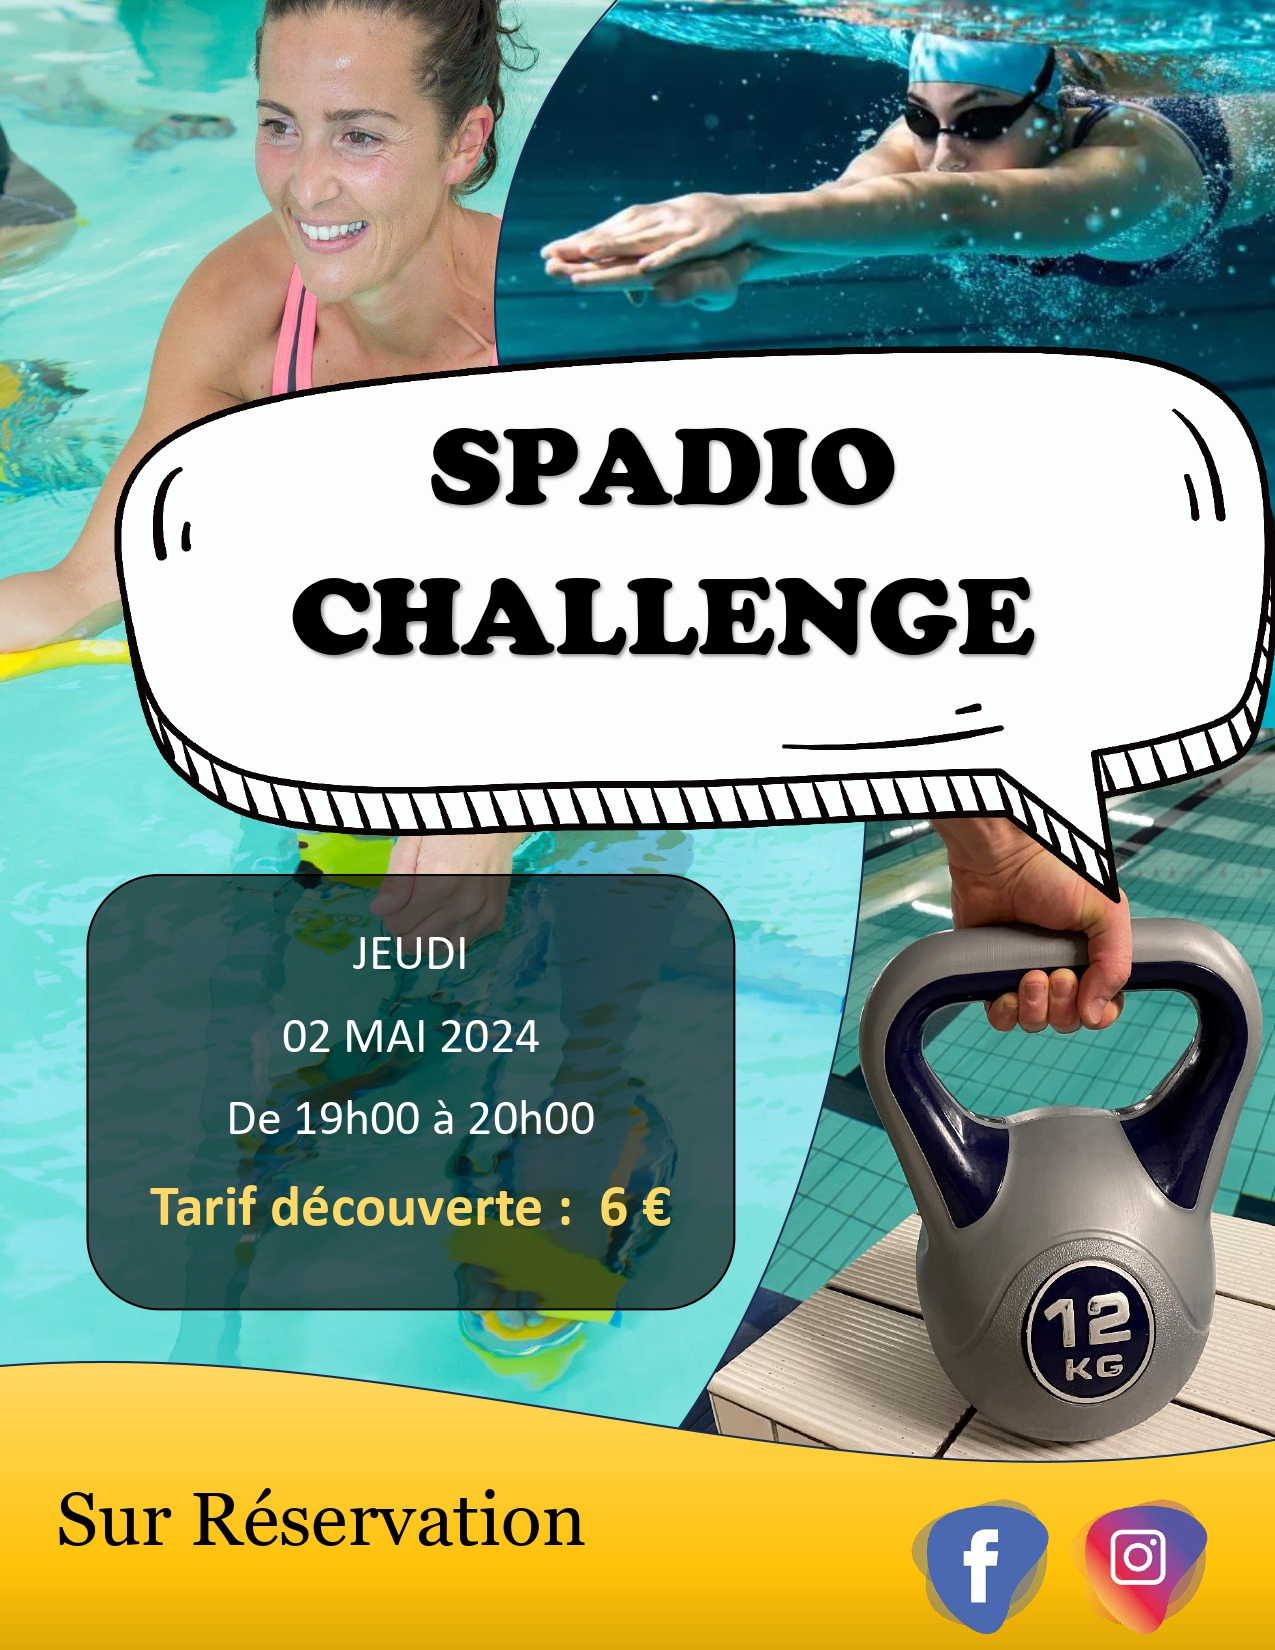 spadio challenge_page 0001 4 